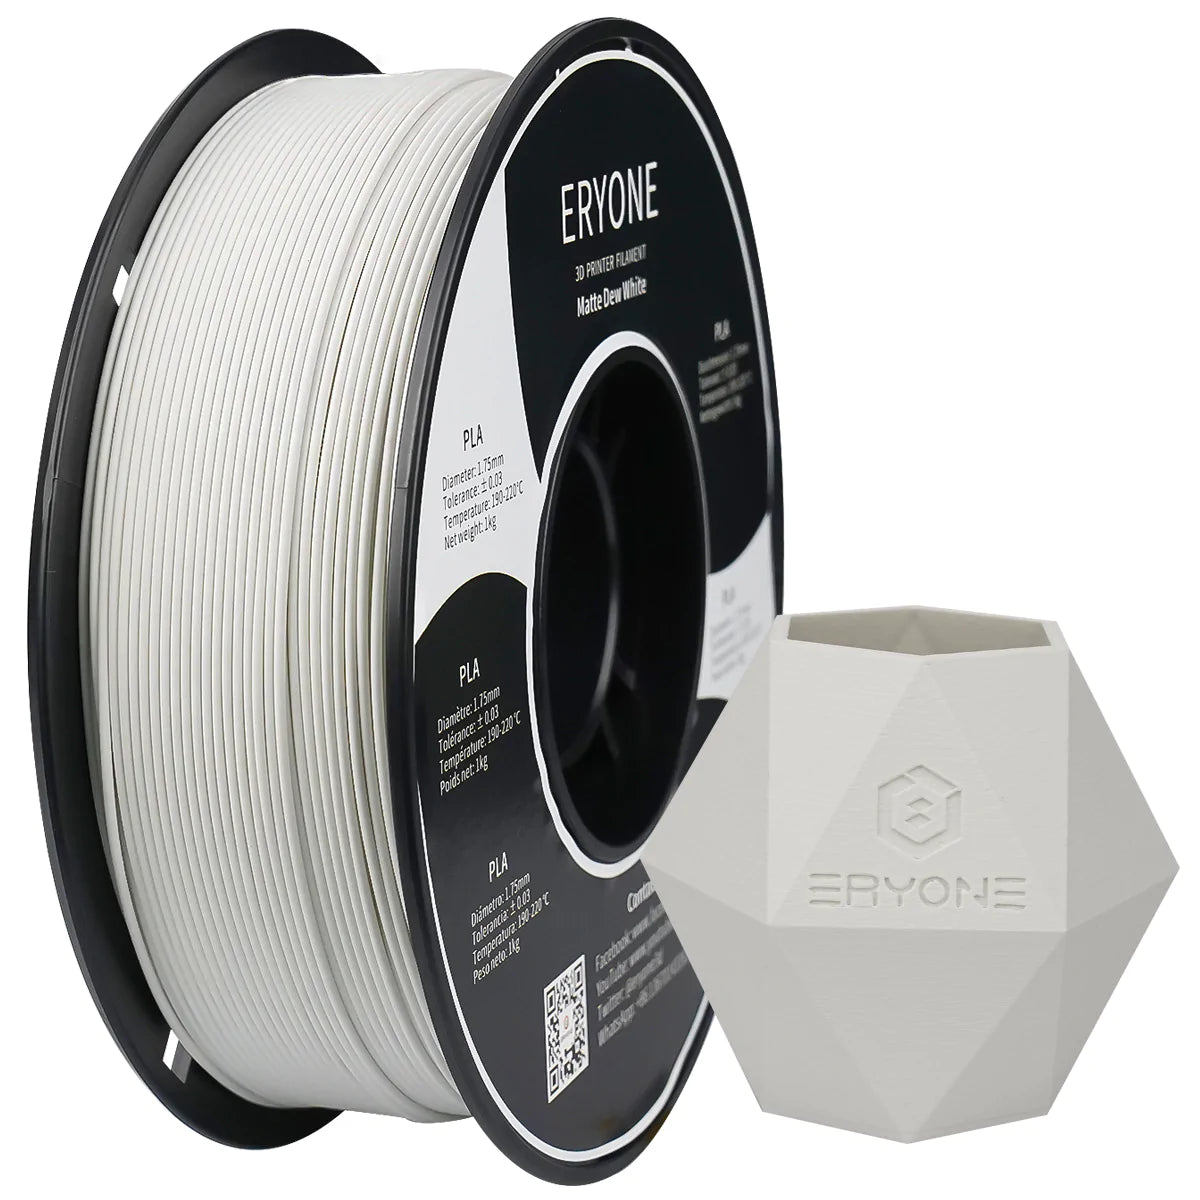 Pre-sale ERYONE Matte PLA Filament, 1.75mm Filament for 3D Printer, 1KG(2.2LBS)/ Spool